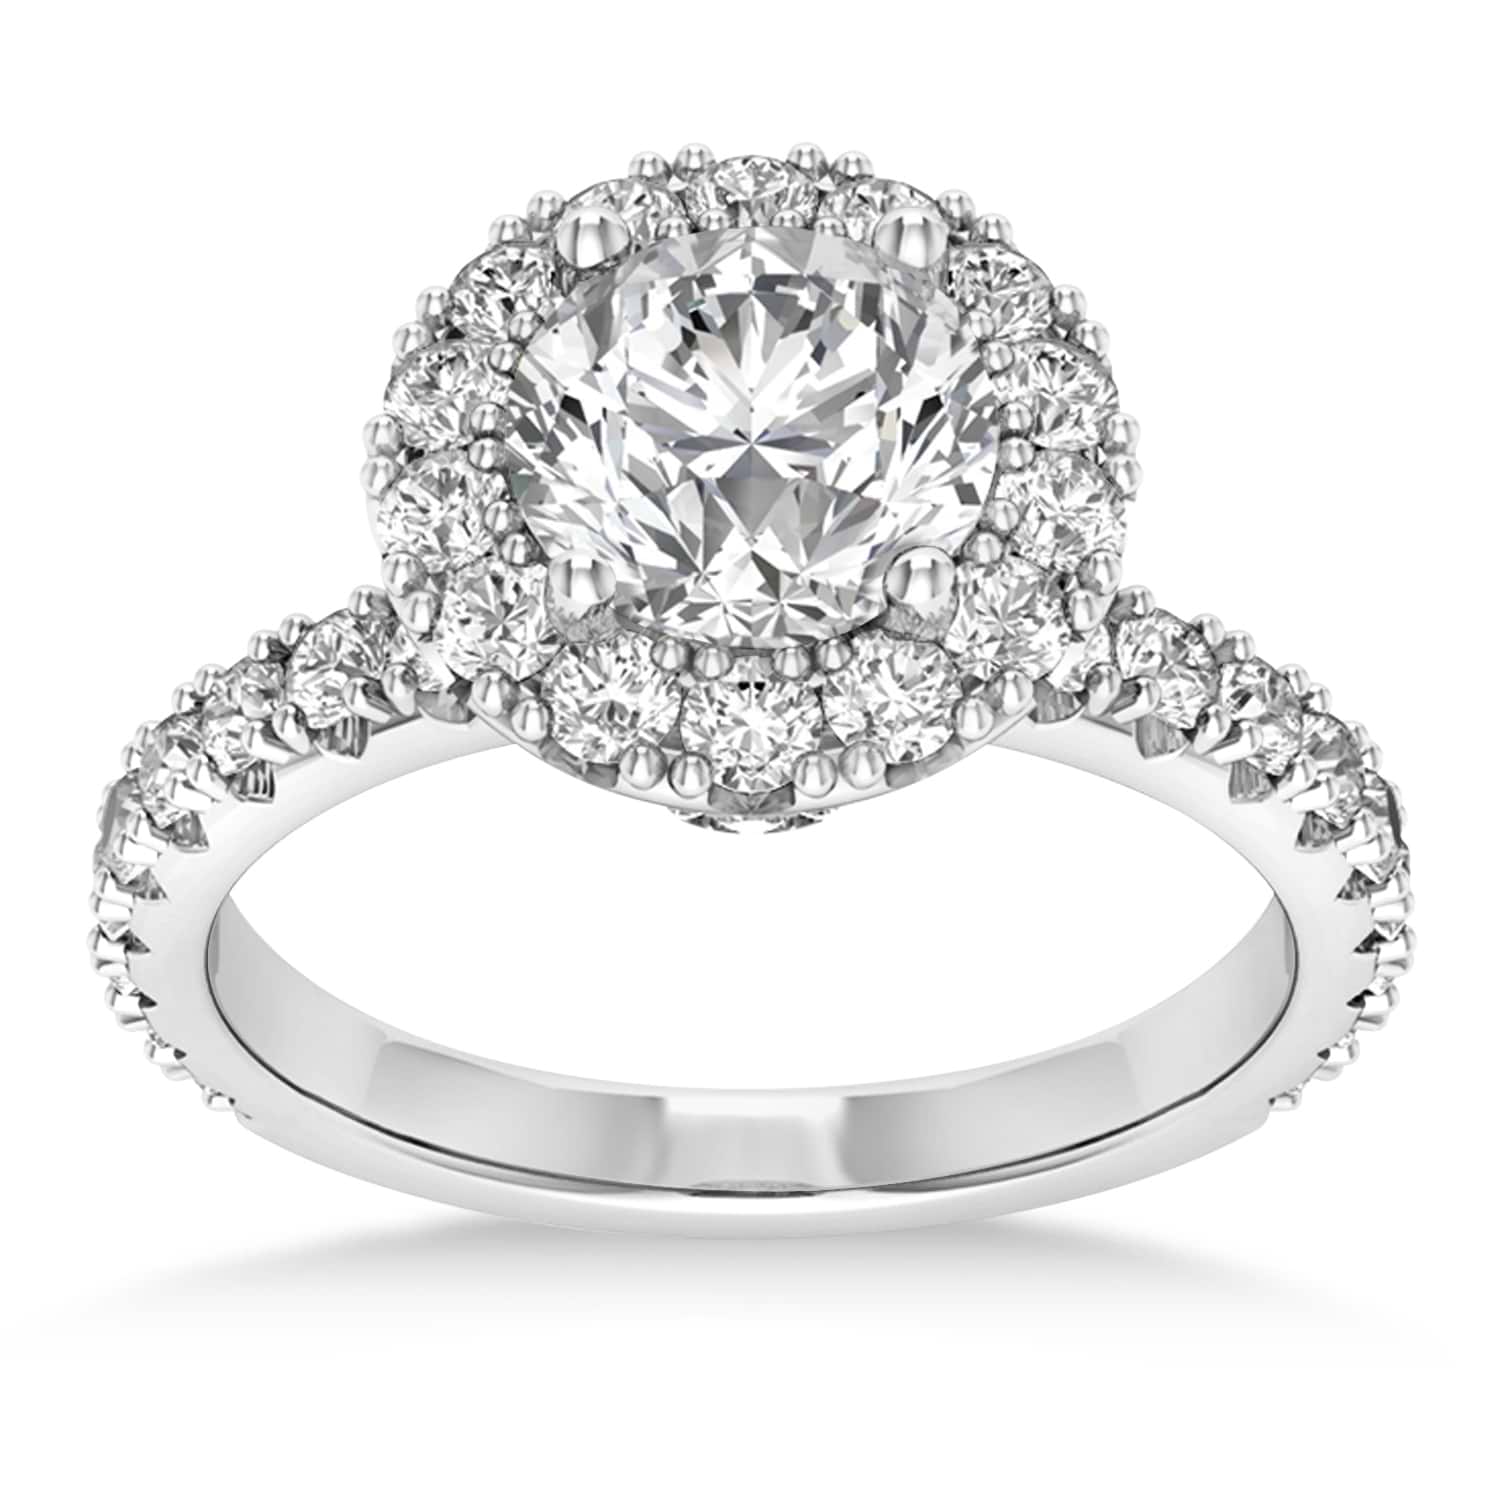 Diamond Halo Engagement Ring 14k White Gold (0.90ct)